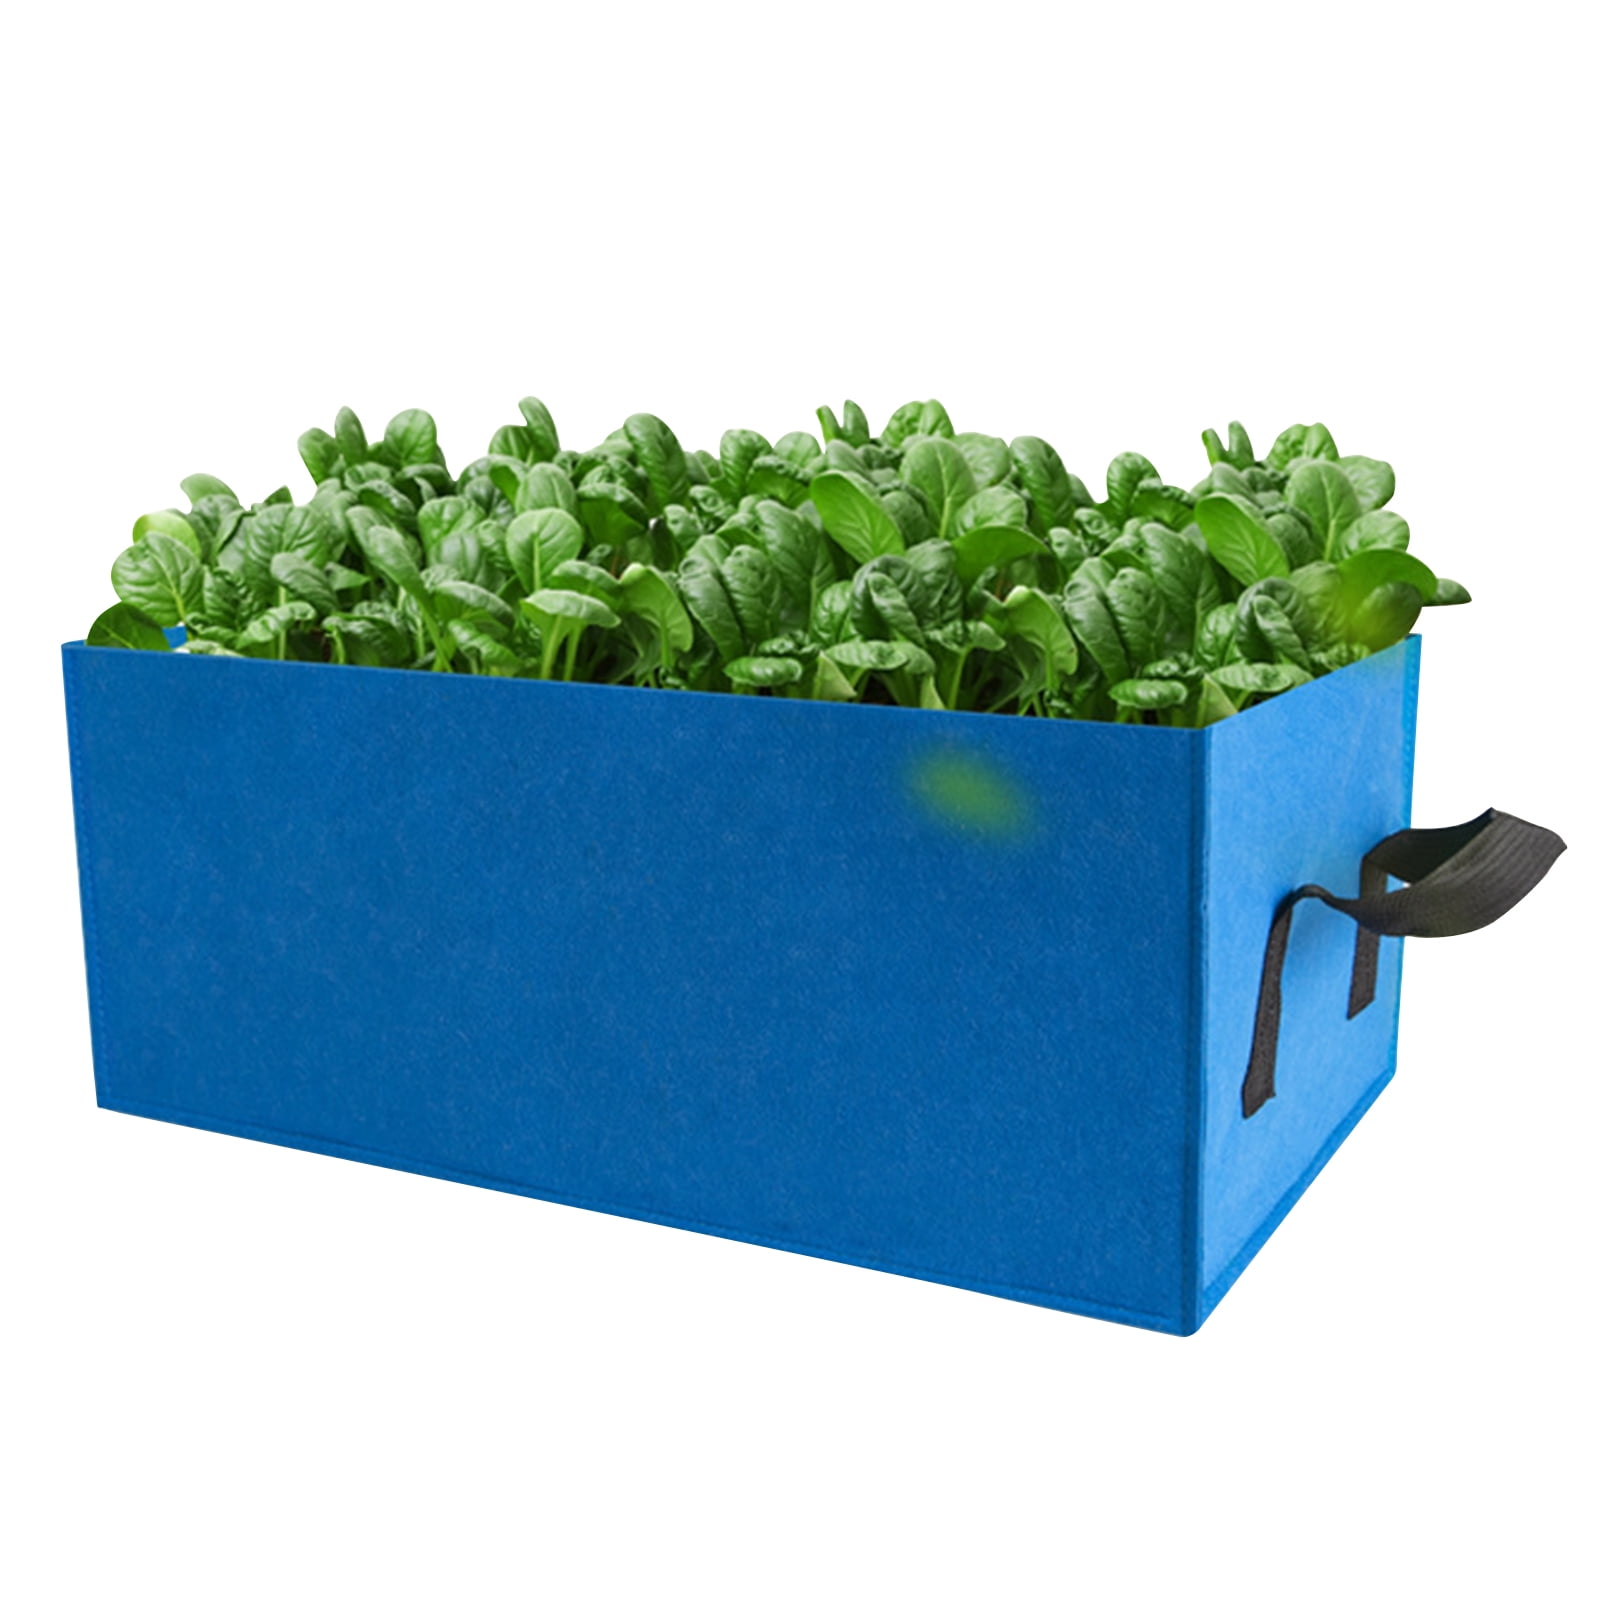 b Pretend Play Fresh Veggies Garden Kit 17 Pcs Felt Vegetables W/Garden Box NEW 